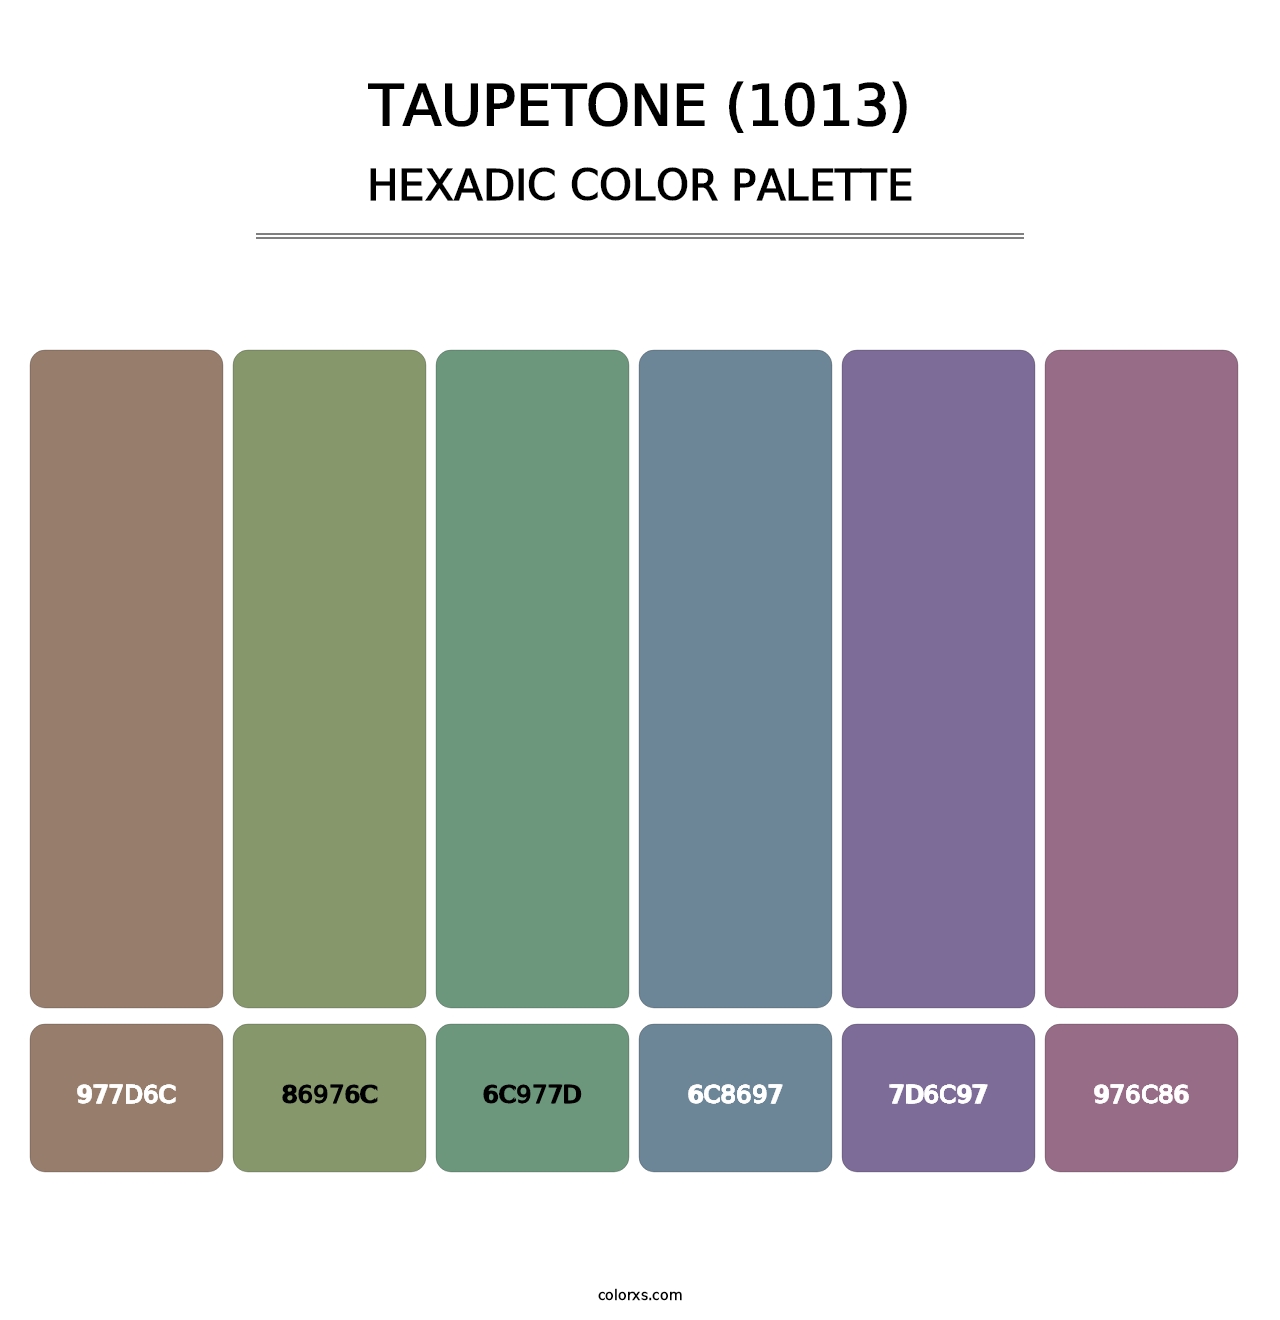 Taupetone (1013) - Hexadic Color Palette